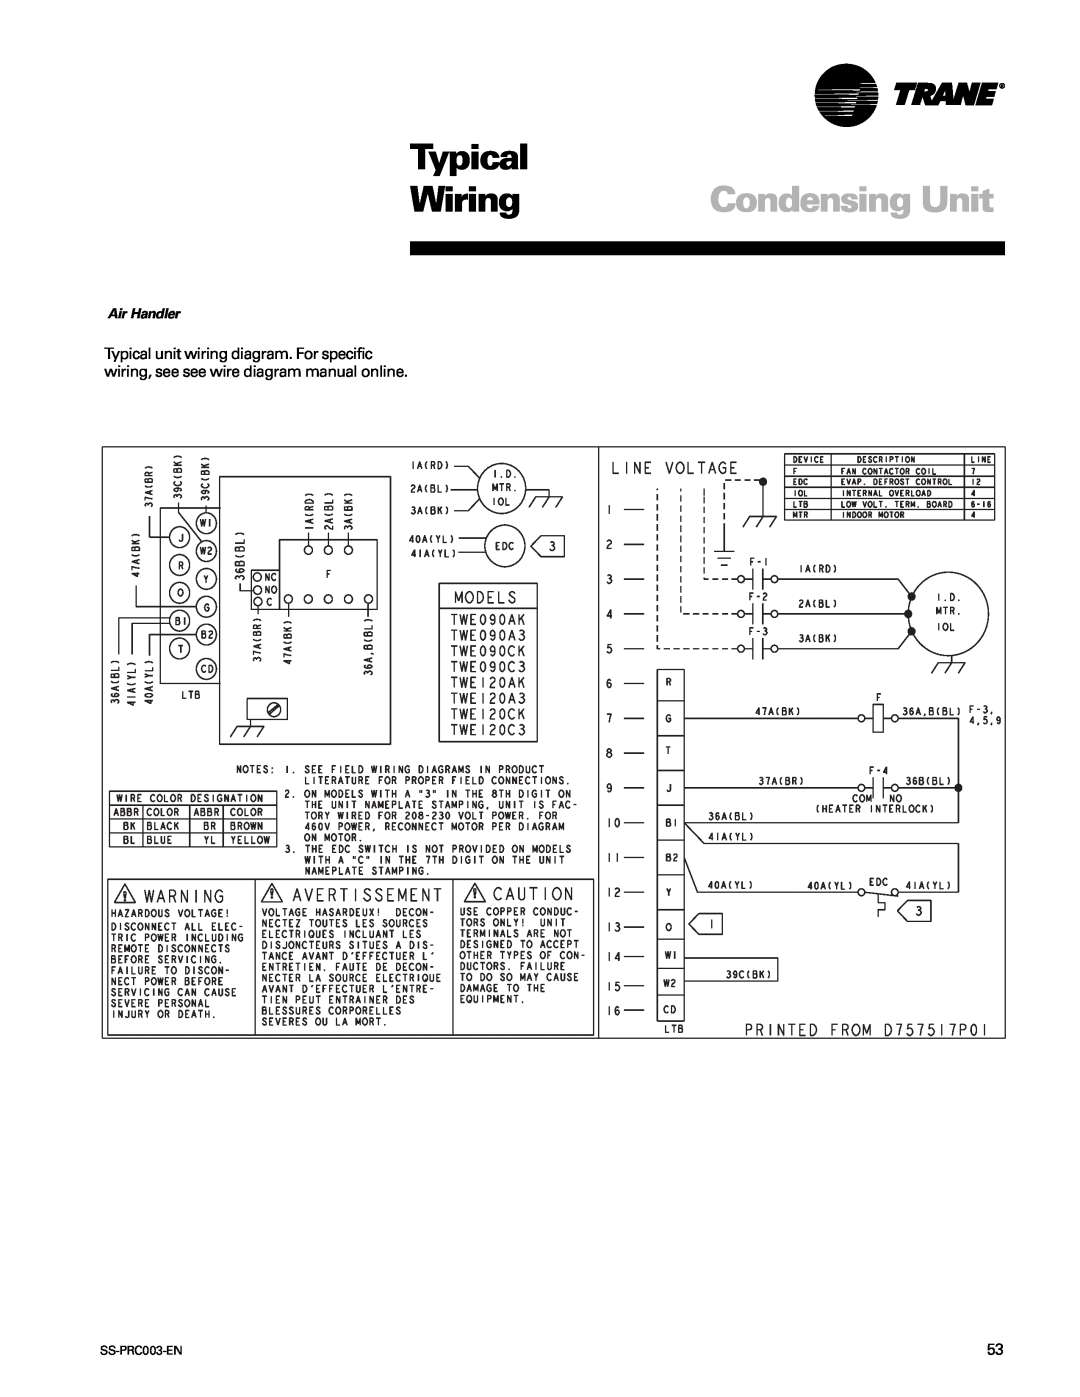 Trane SS-PRC003-EN manual Typical, Wiring, Condensing Unit, Air Handler 